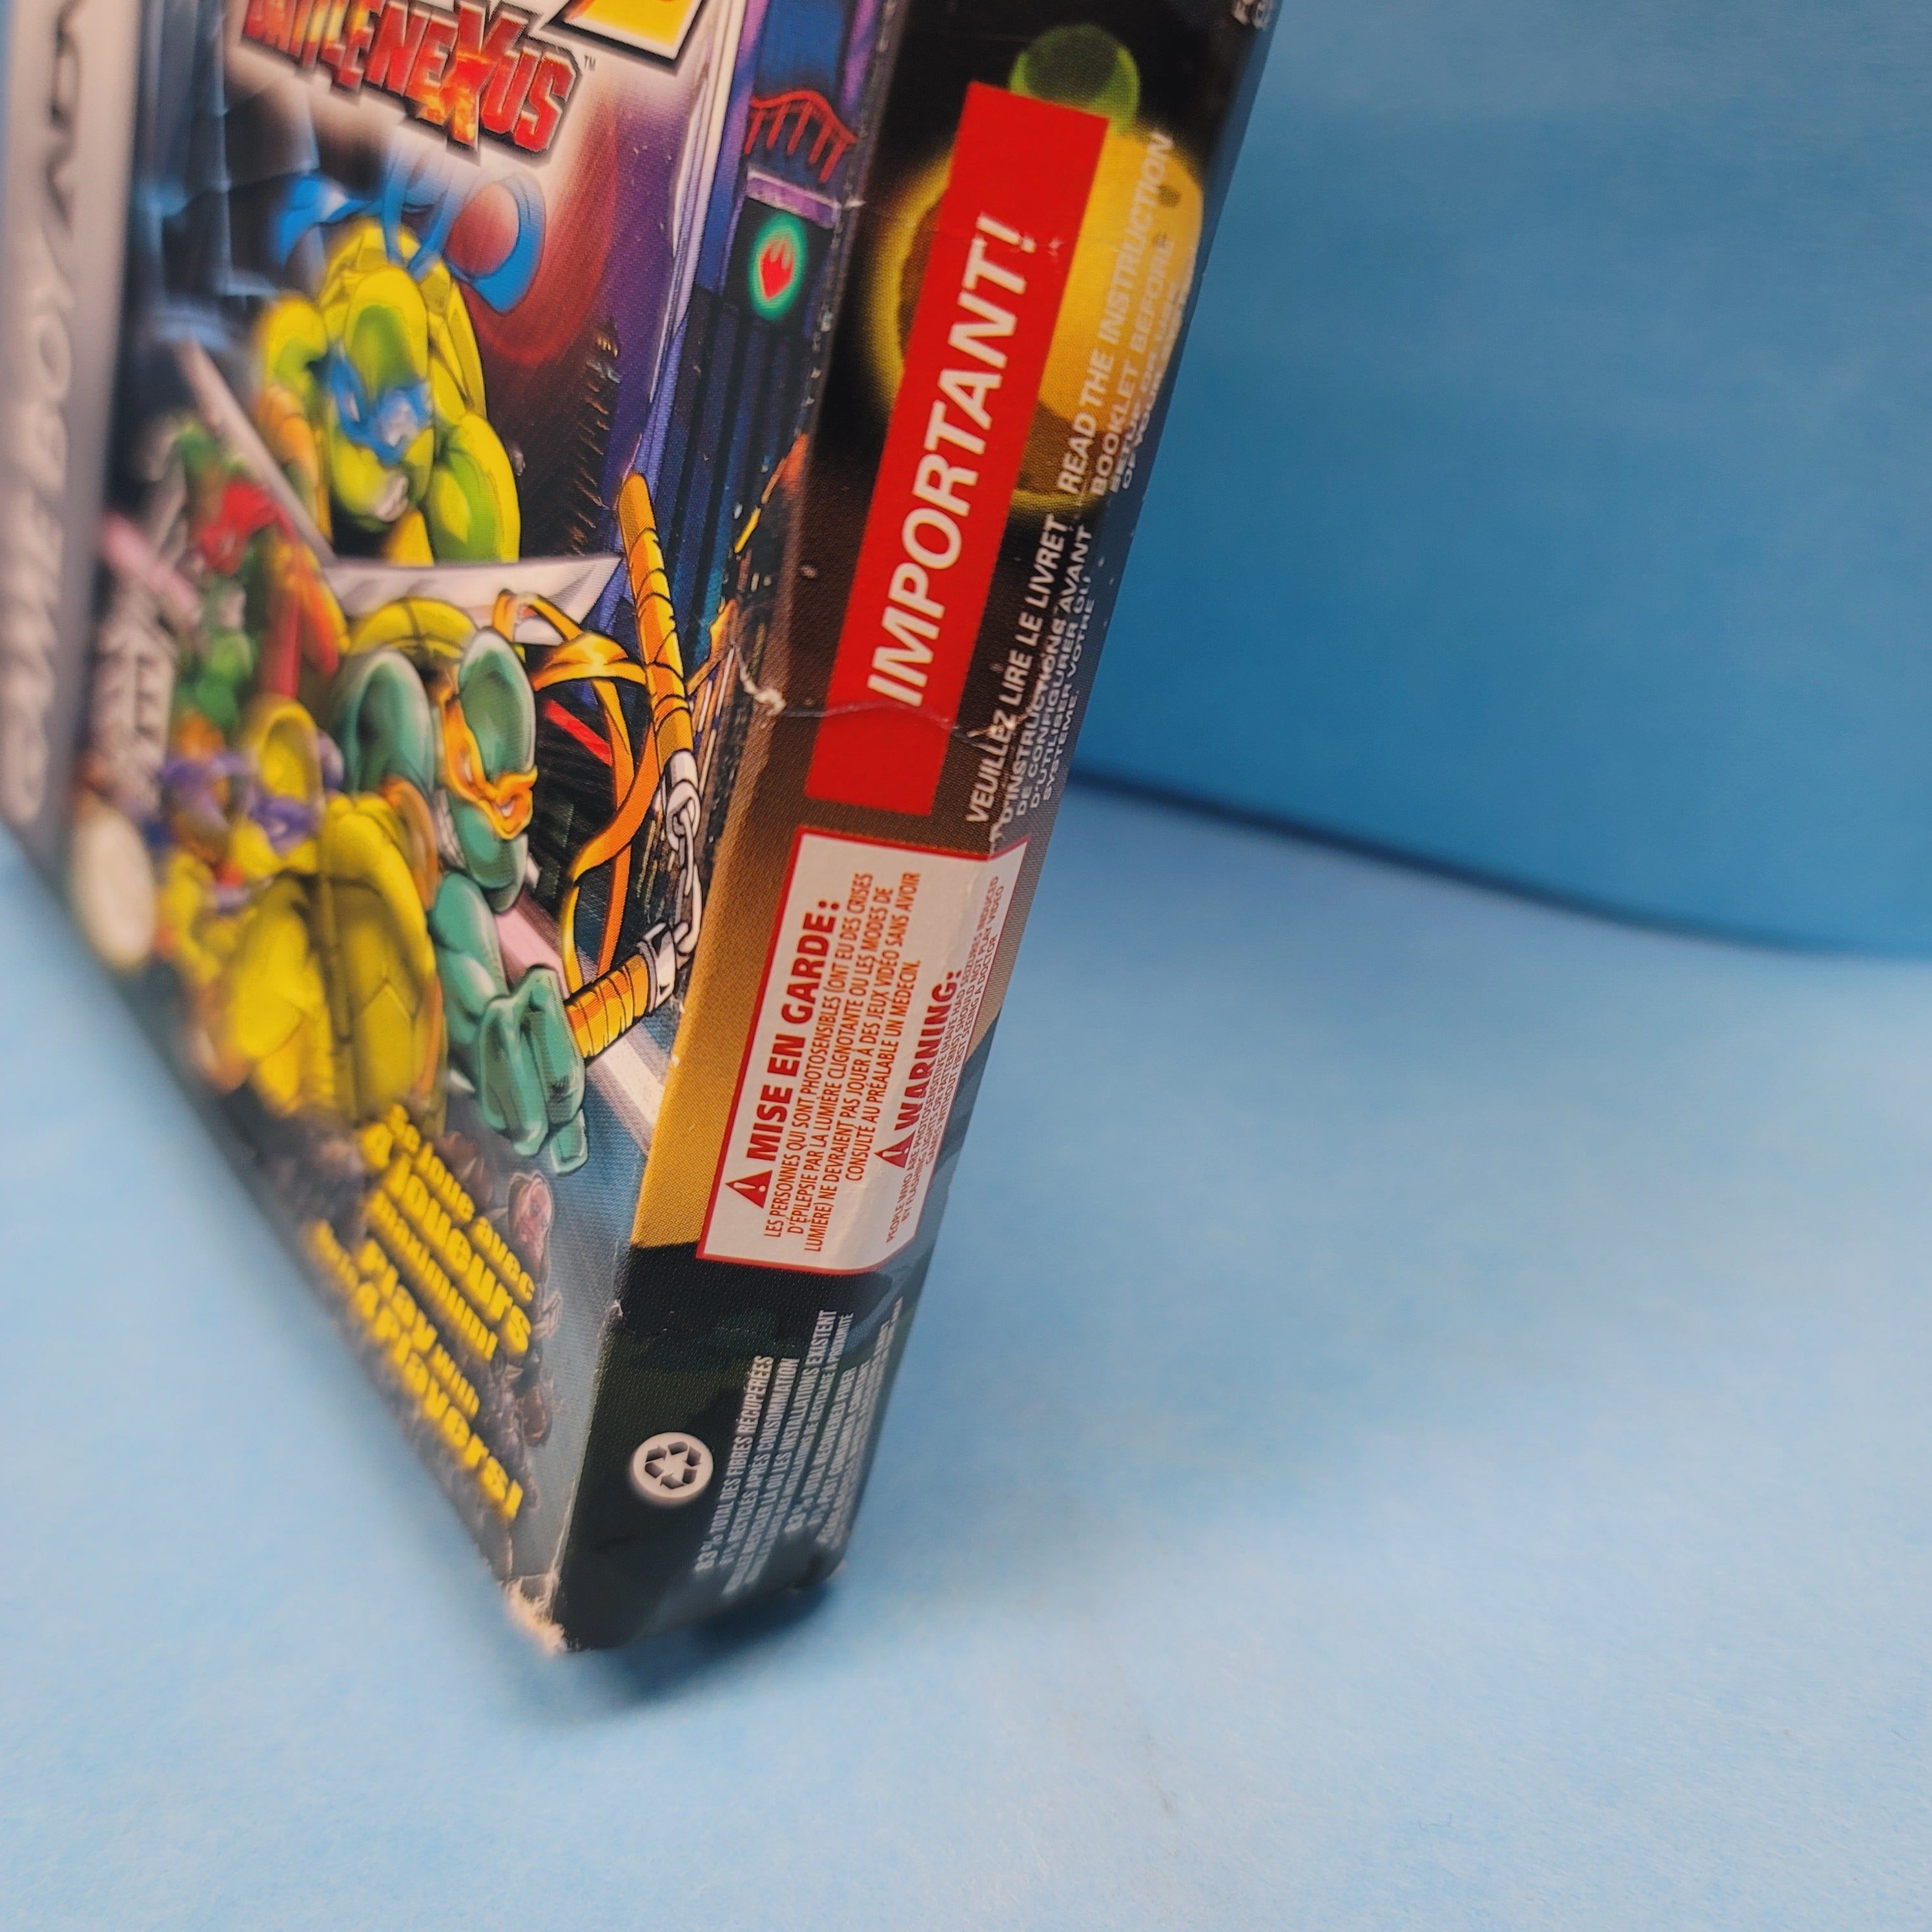 GBA - Teenage Mutant Ninja Turtles 2 Battle Nexus (Complete in Box / B / With Manual)